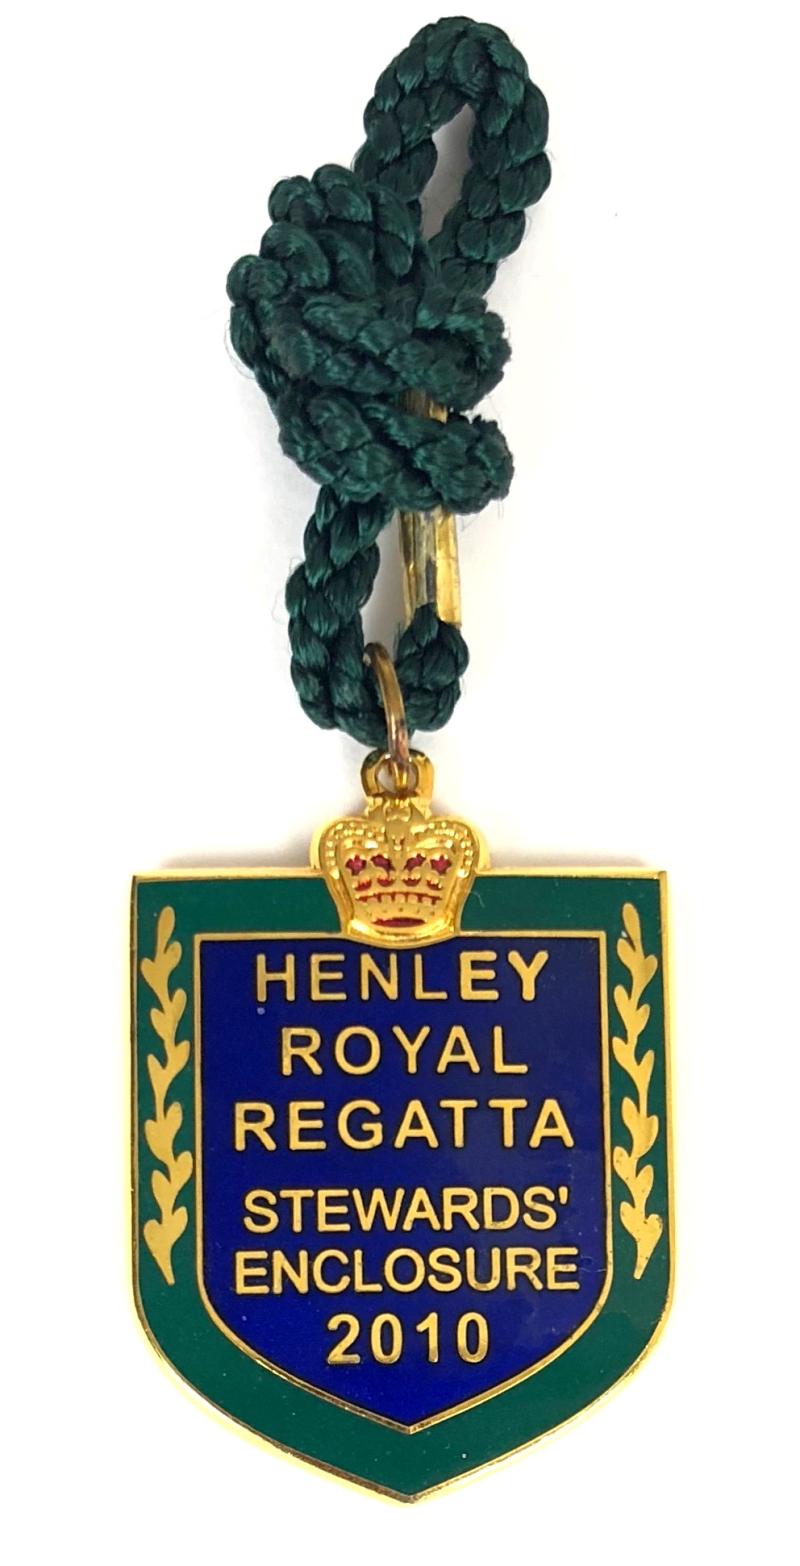 2010 Henley Royal Regatta stewards enclosure badge